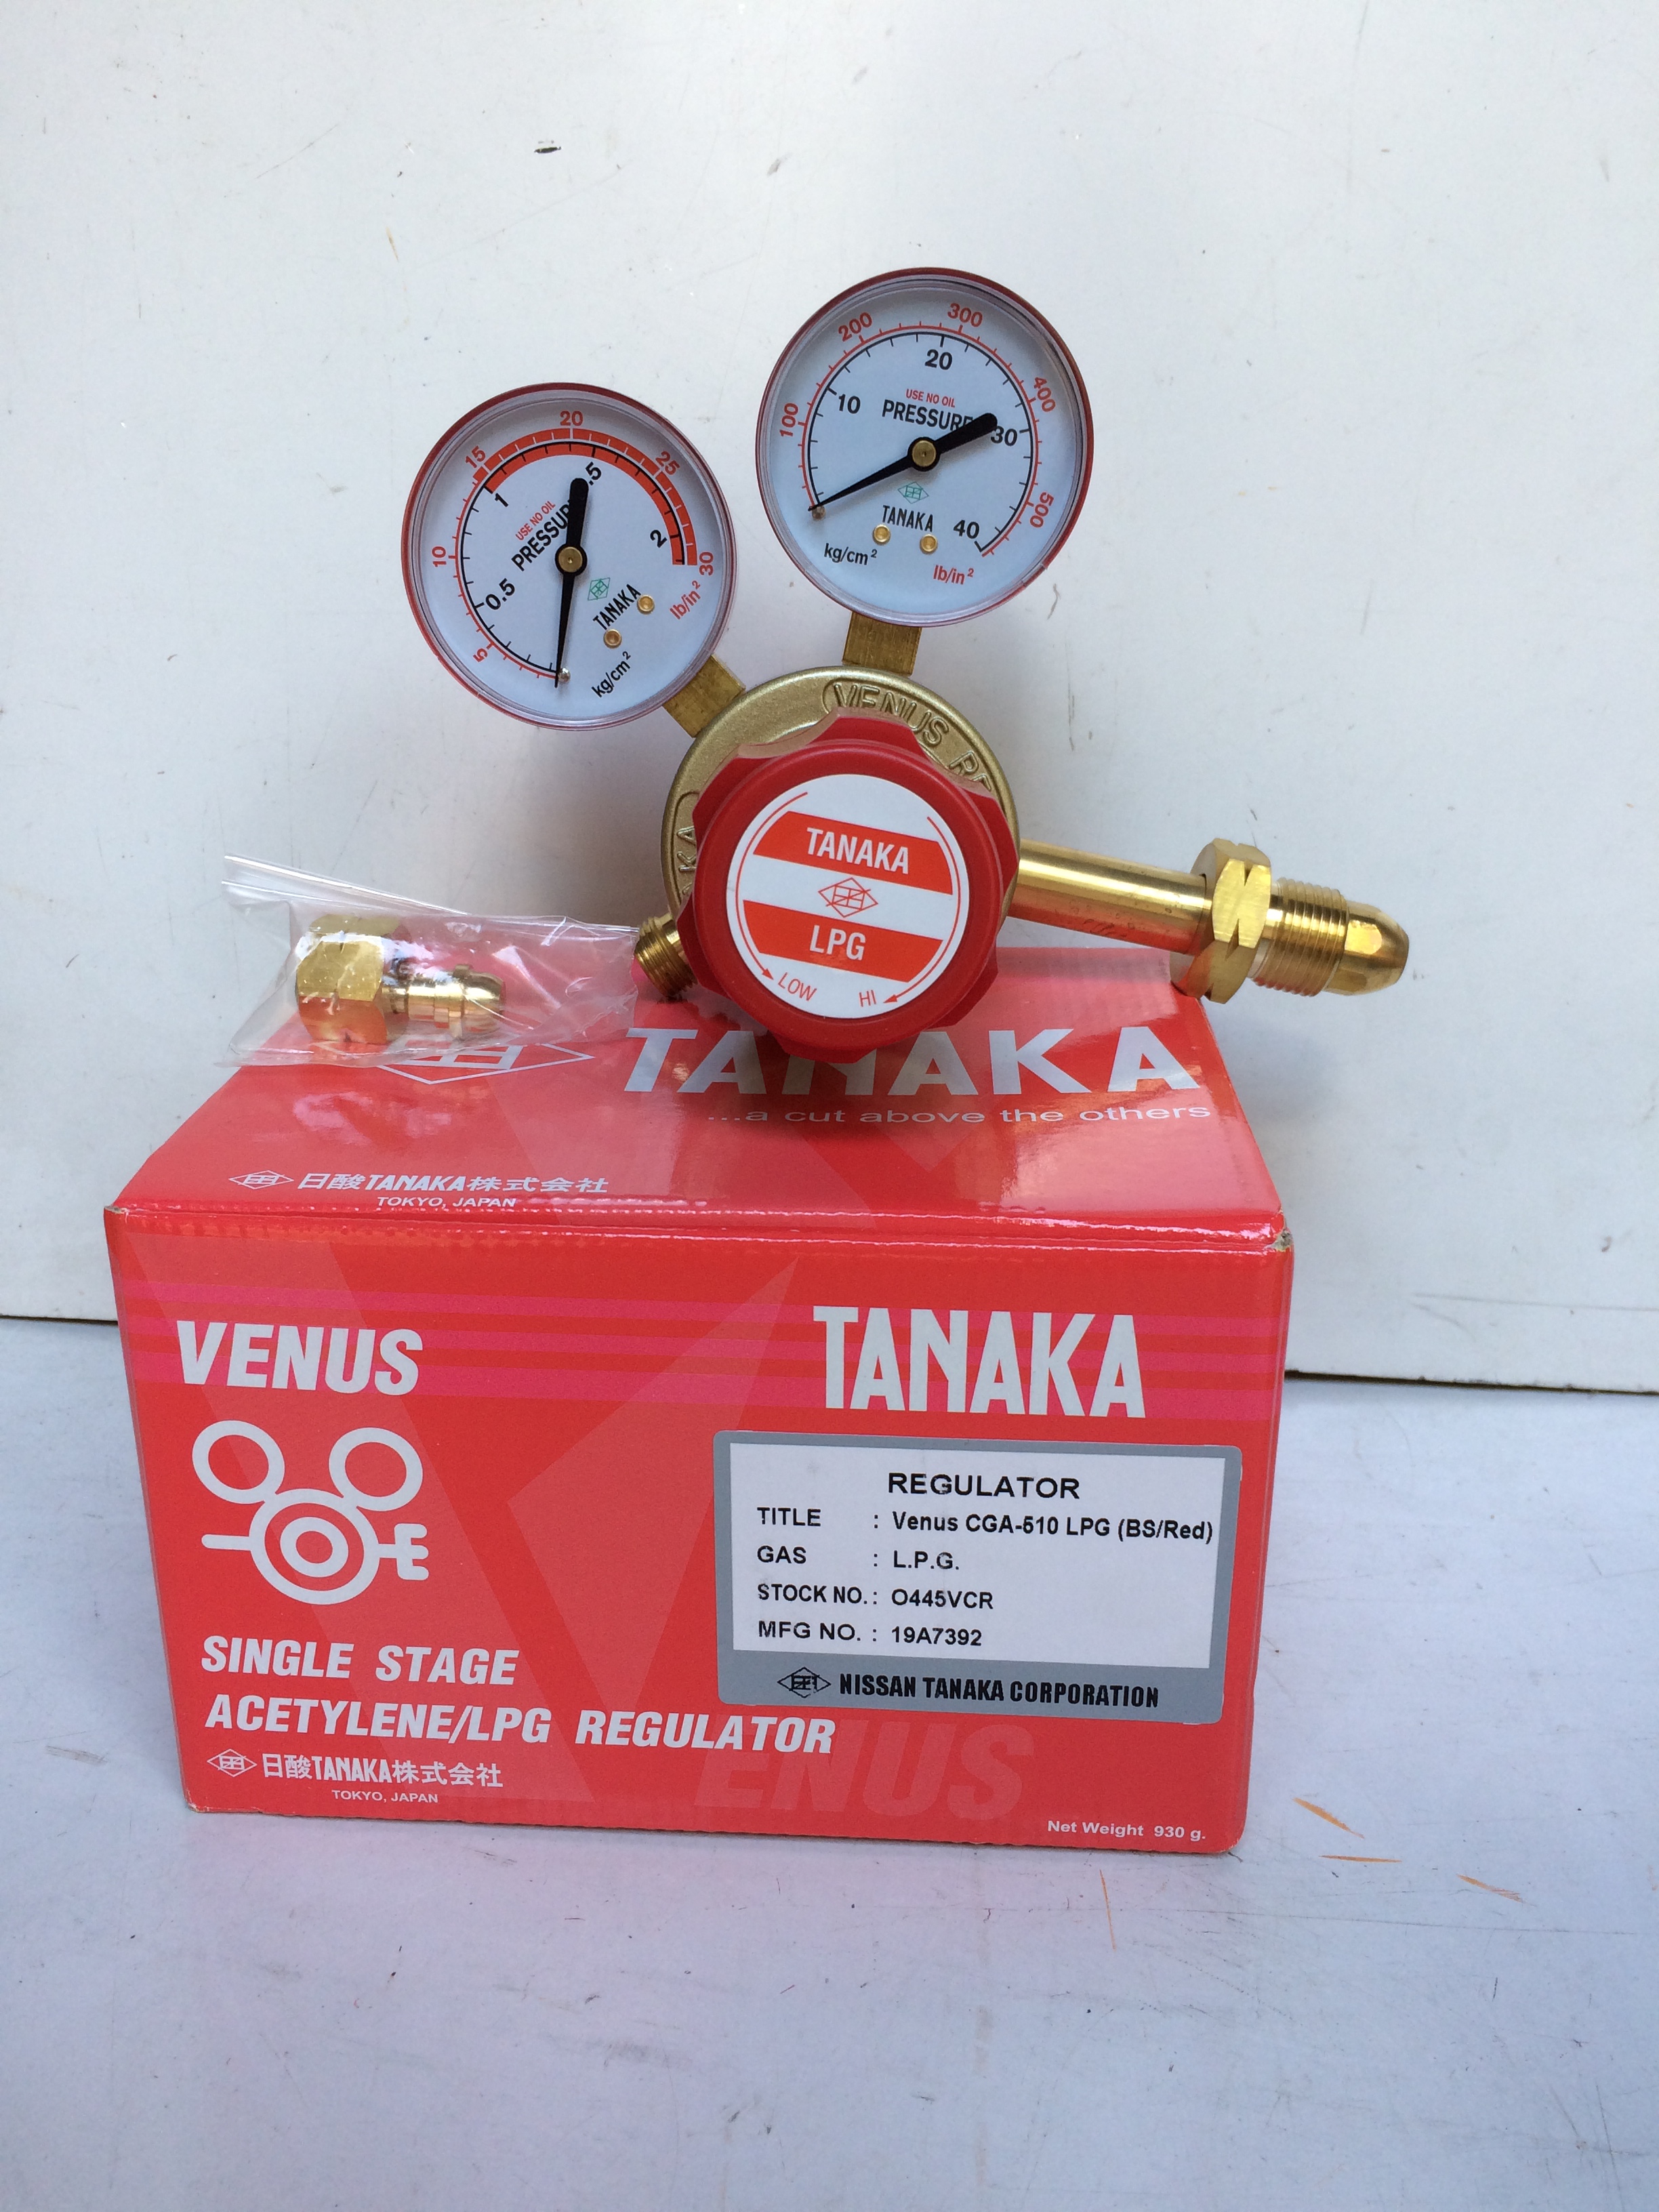 Đồng hồ đá (Acetylen/LPG) TANAKA Venus CGA 510